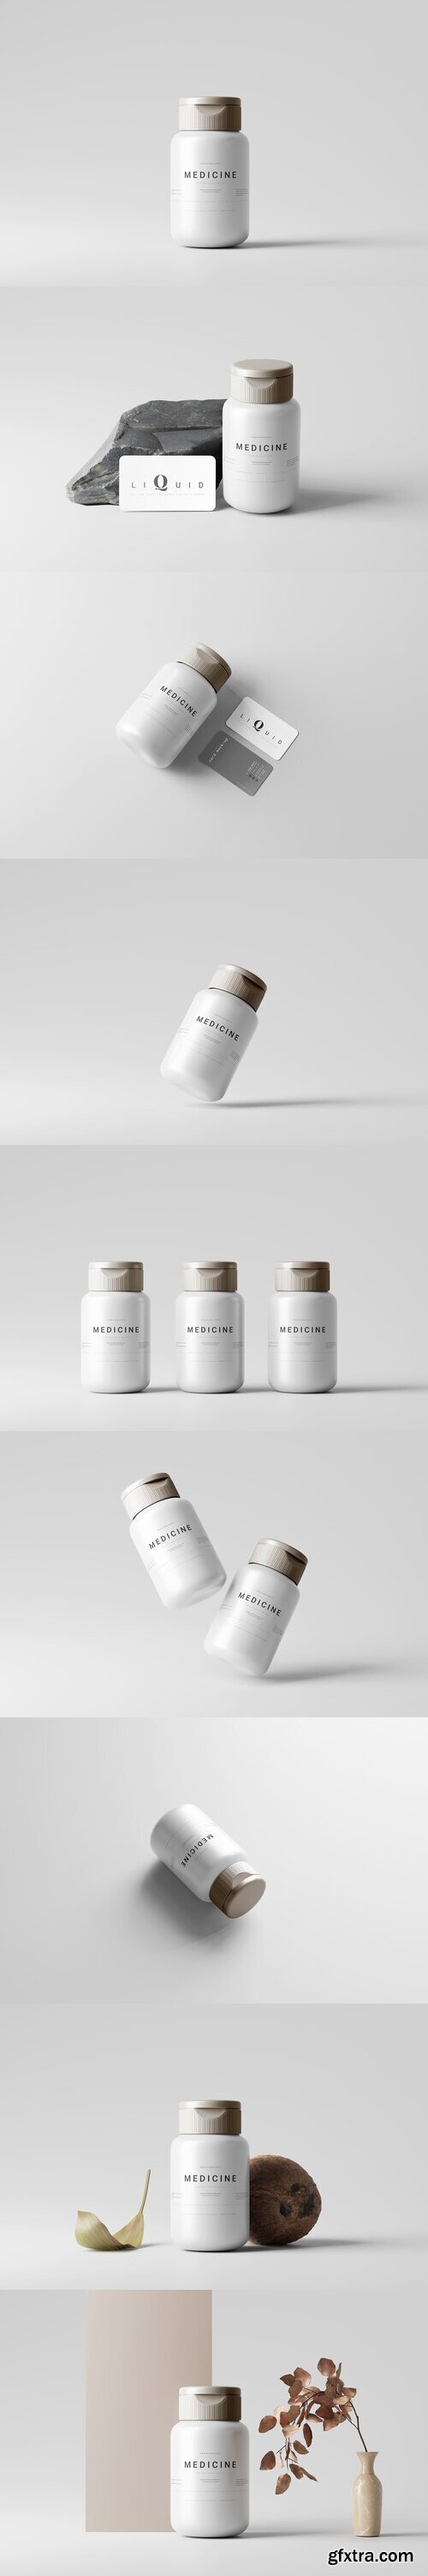 CreativeMarket - Plastic Medicine Bottle Mockup 7460282